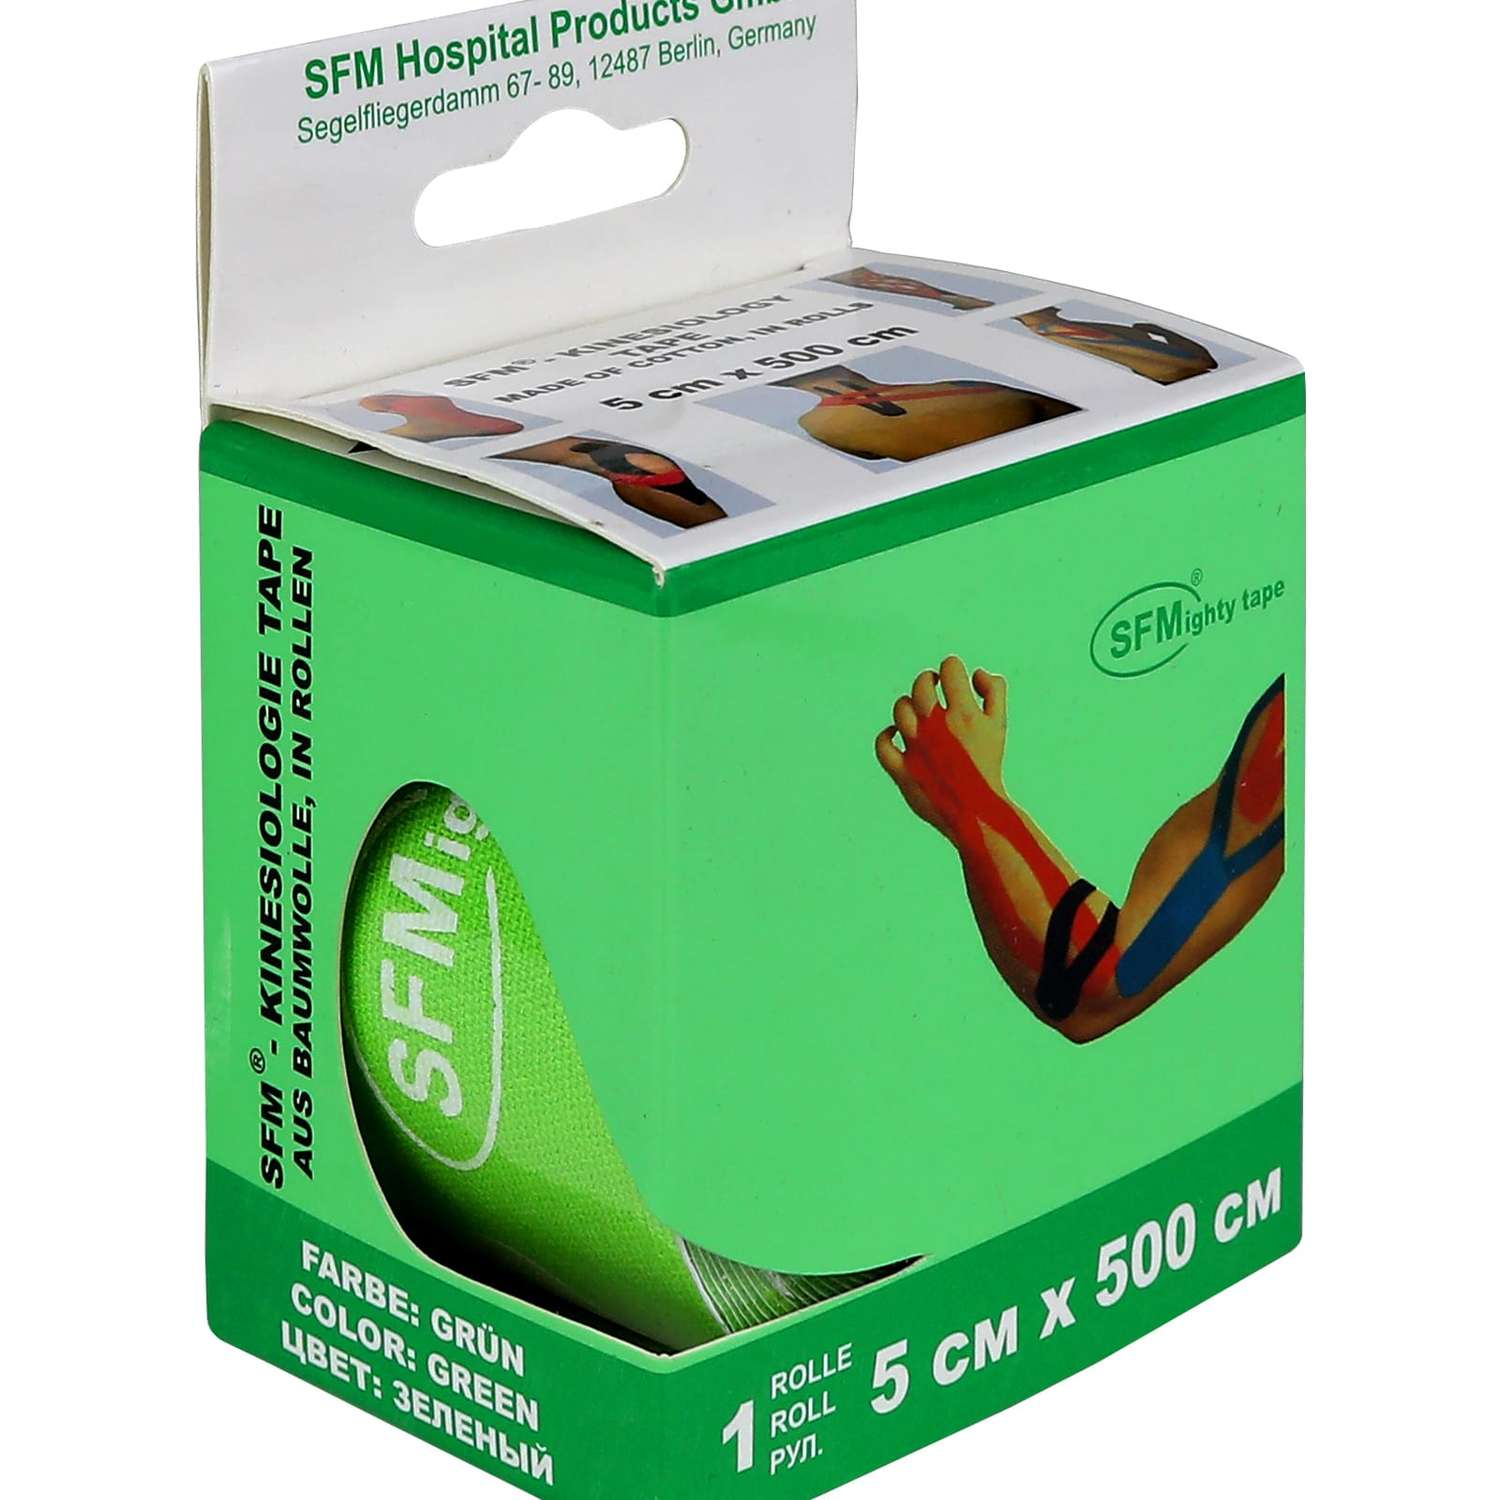 Кинезиотейп SFM Hospital Products Plaster на хлопковой основе 5х500 см зеленого цвета в диспенсере с логотипом - фото 1